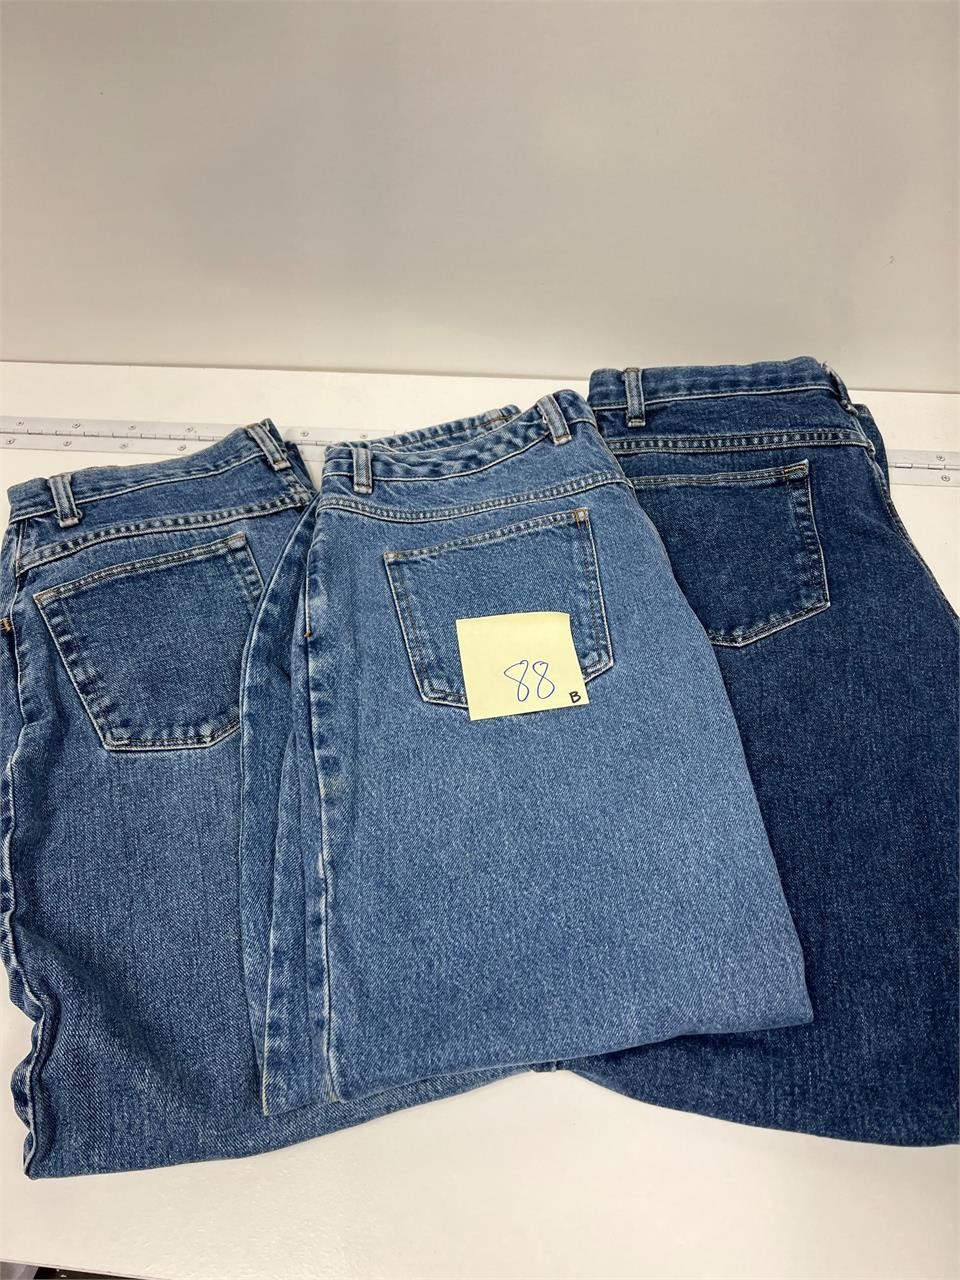 Wrangler & Talbots Woman’s Jeans